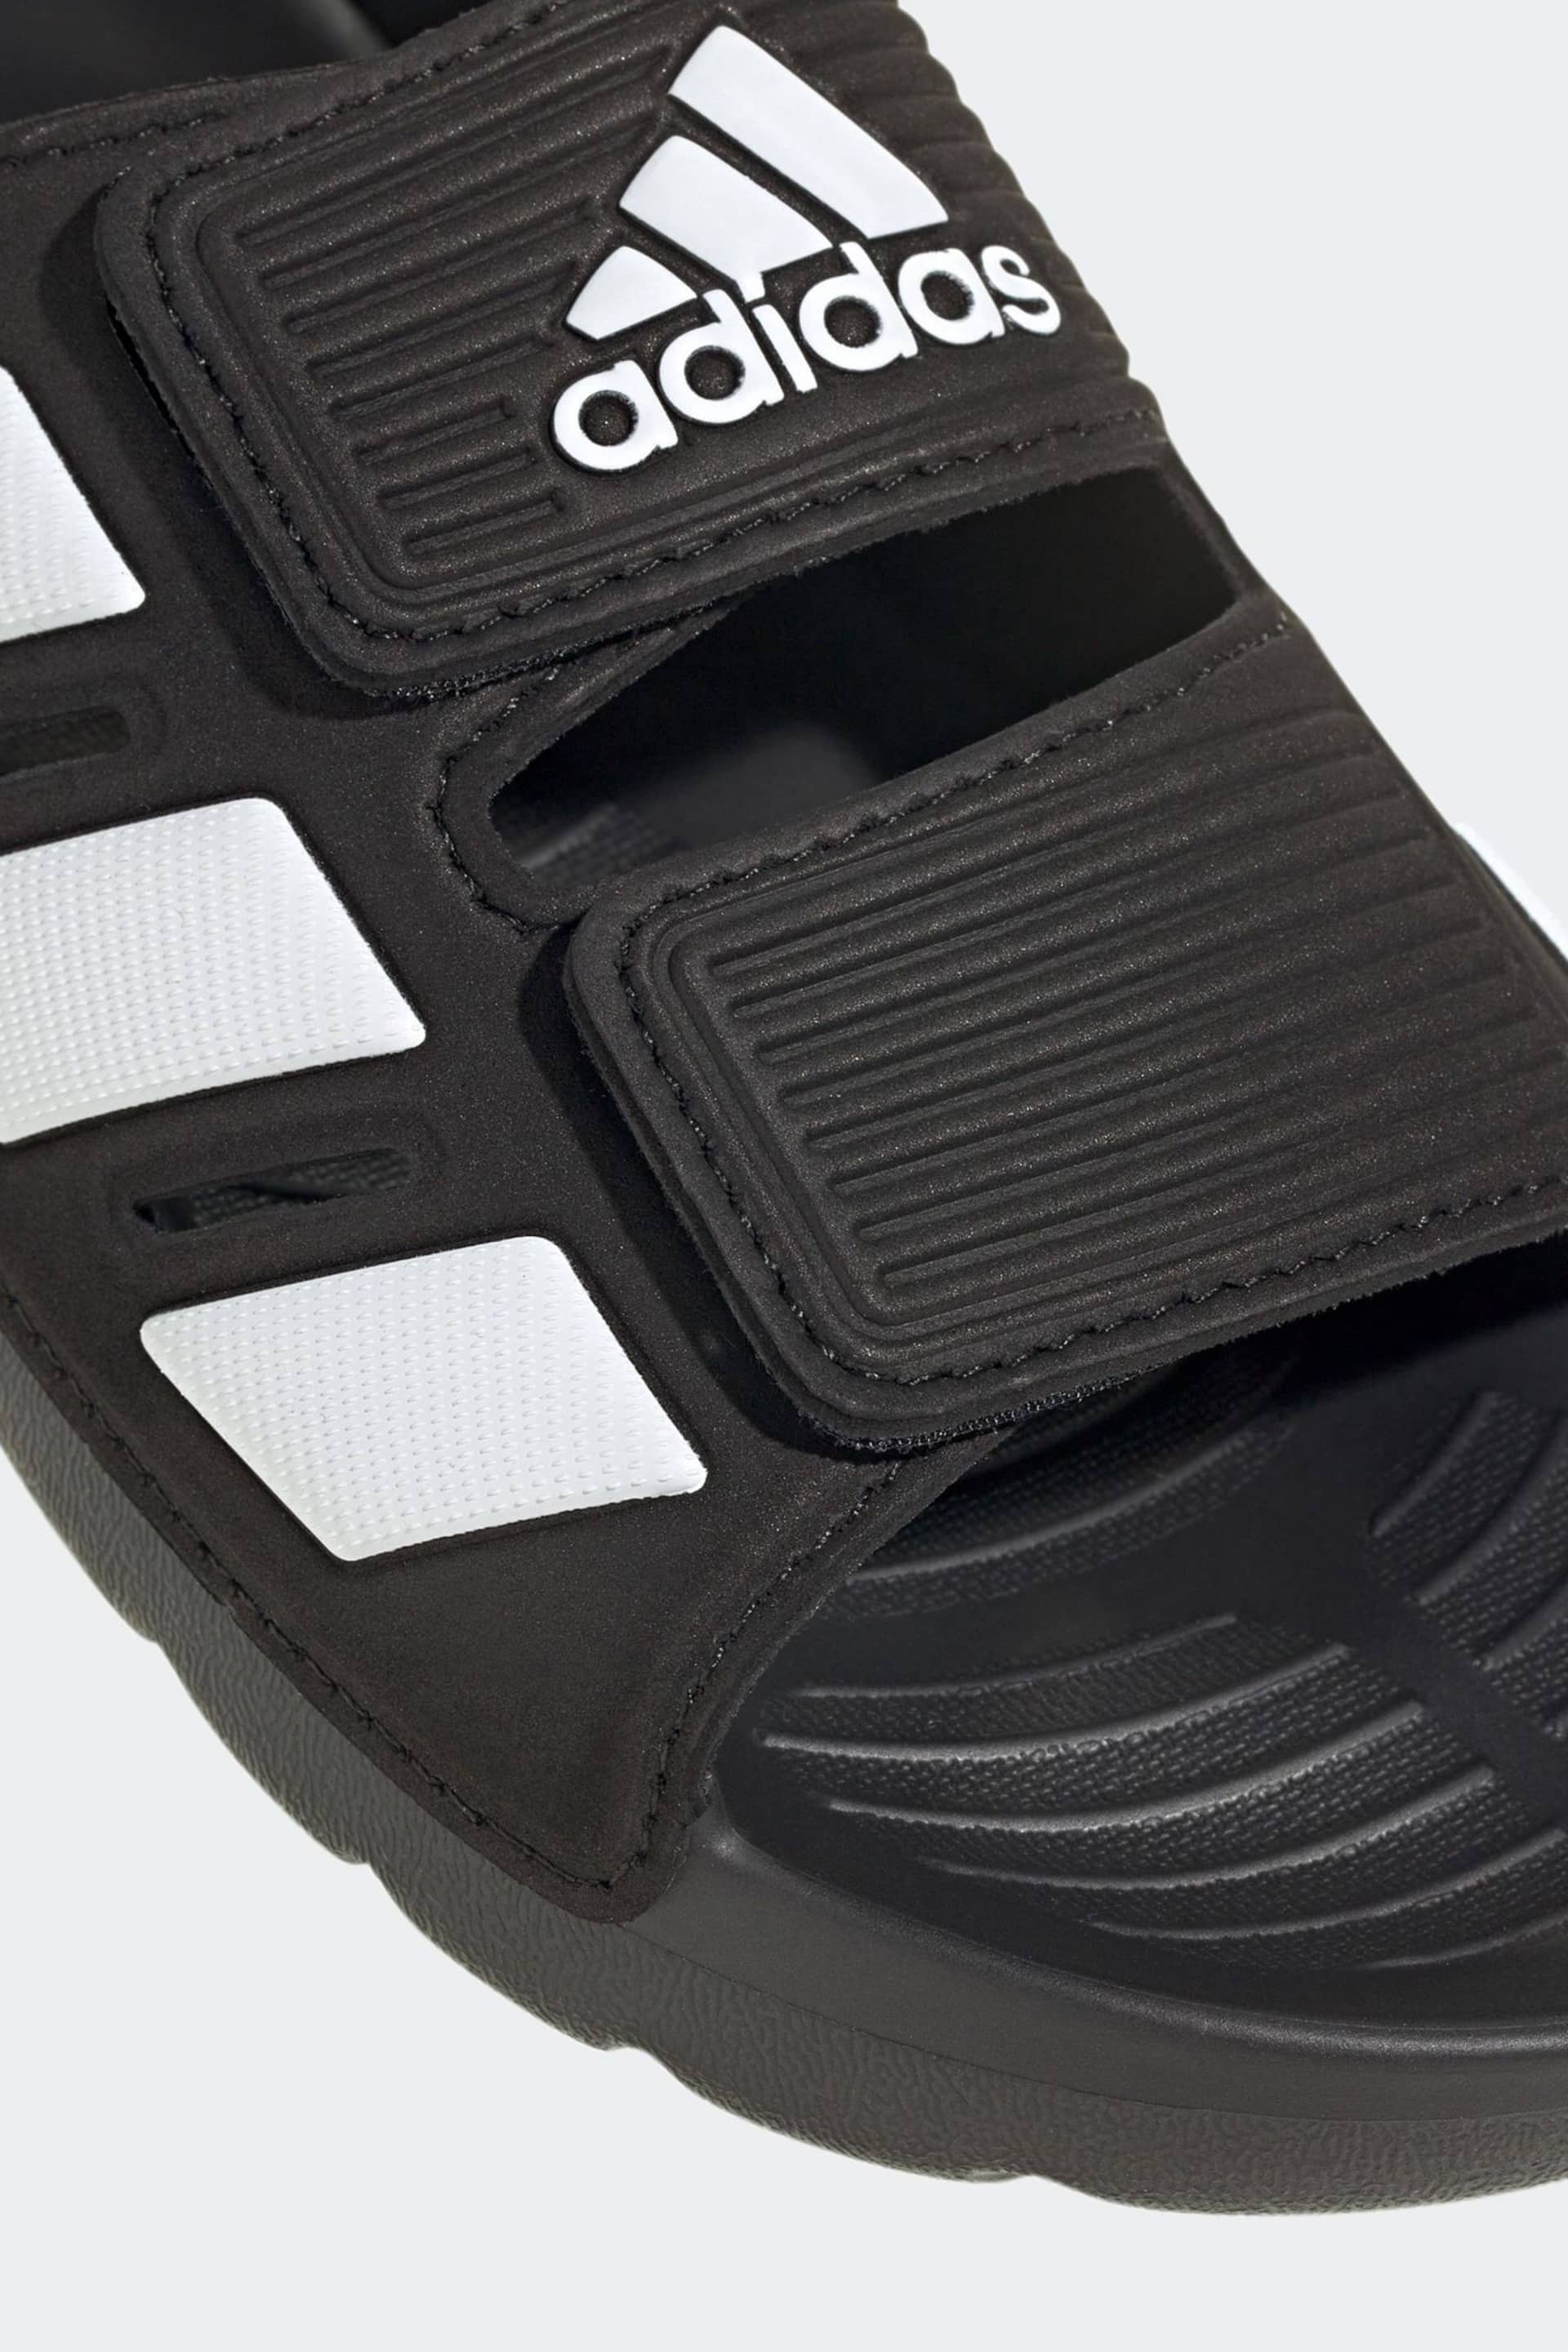 adidas Black Sportswear Altaswim 2.0 Sandals - Image 9 of 9